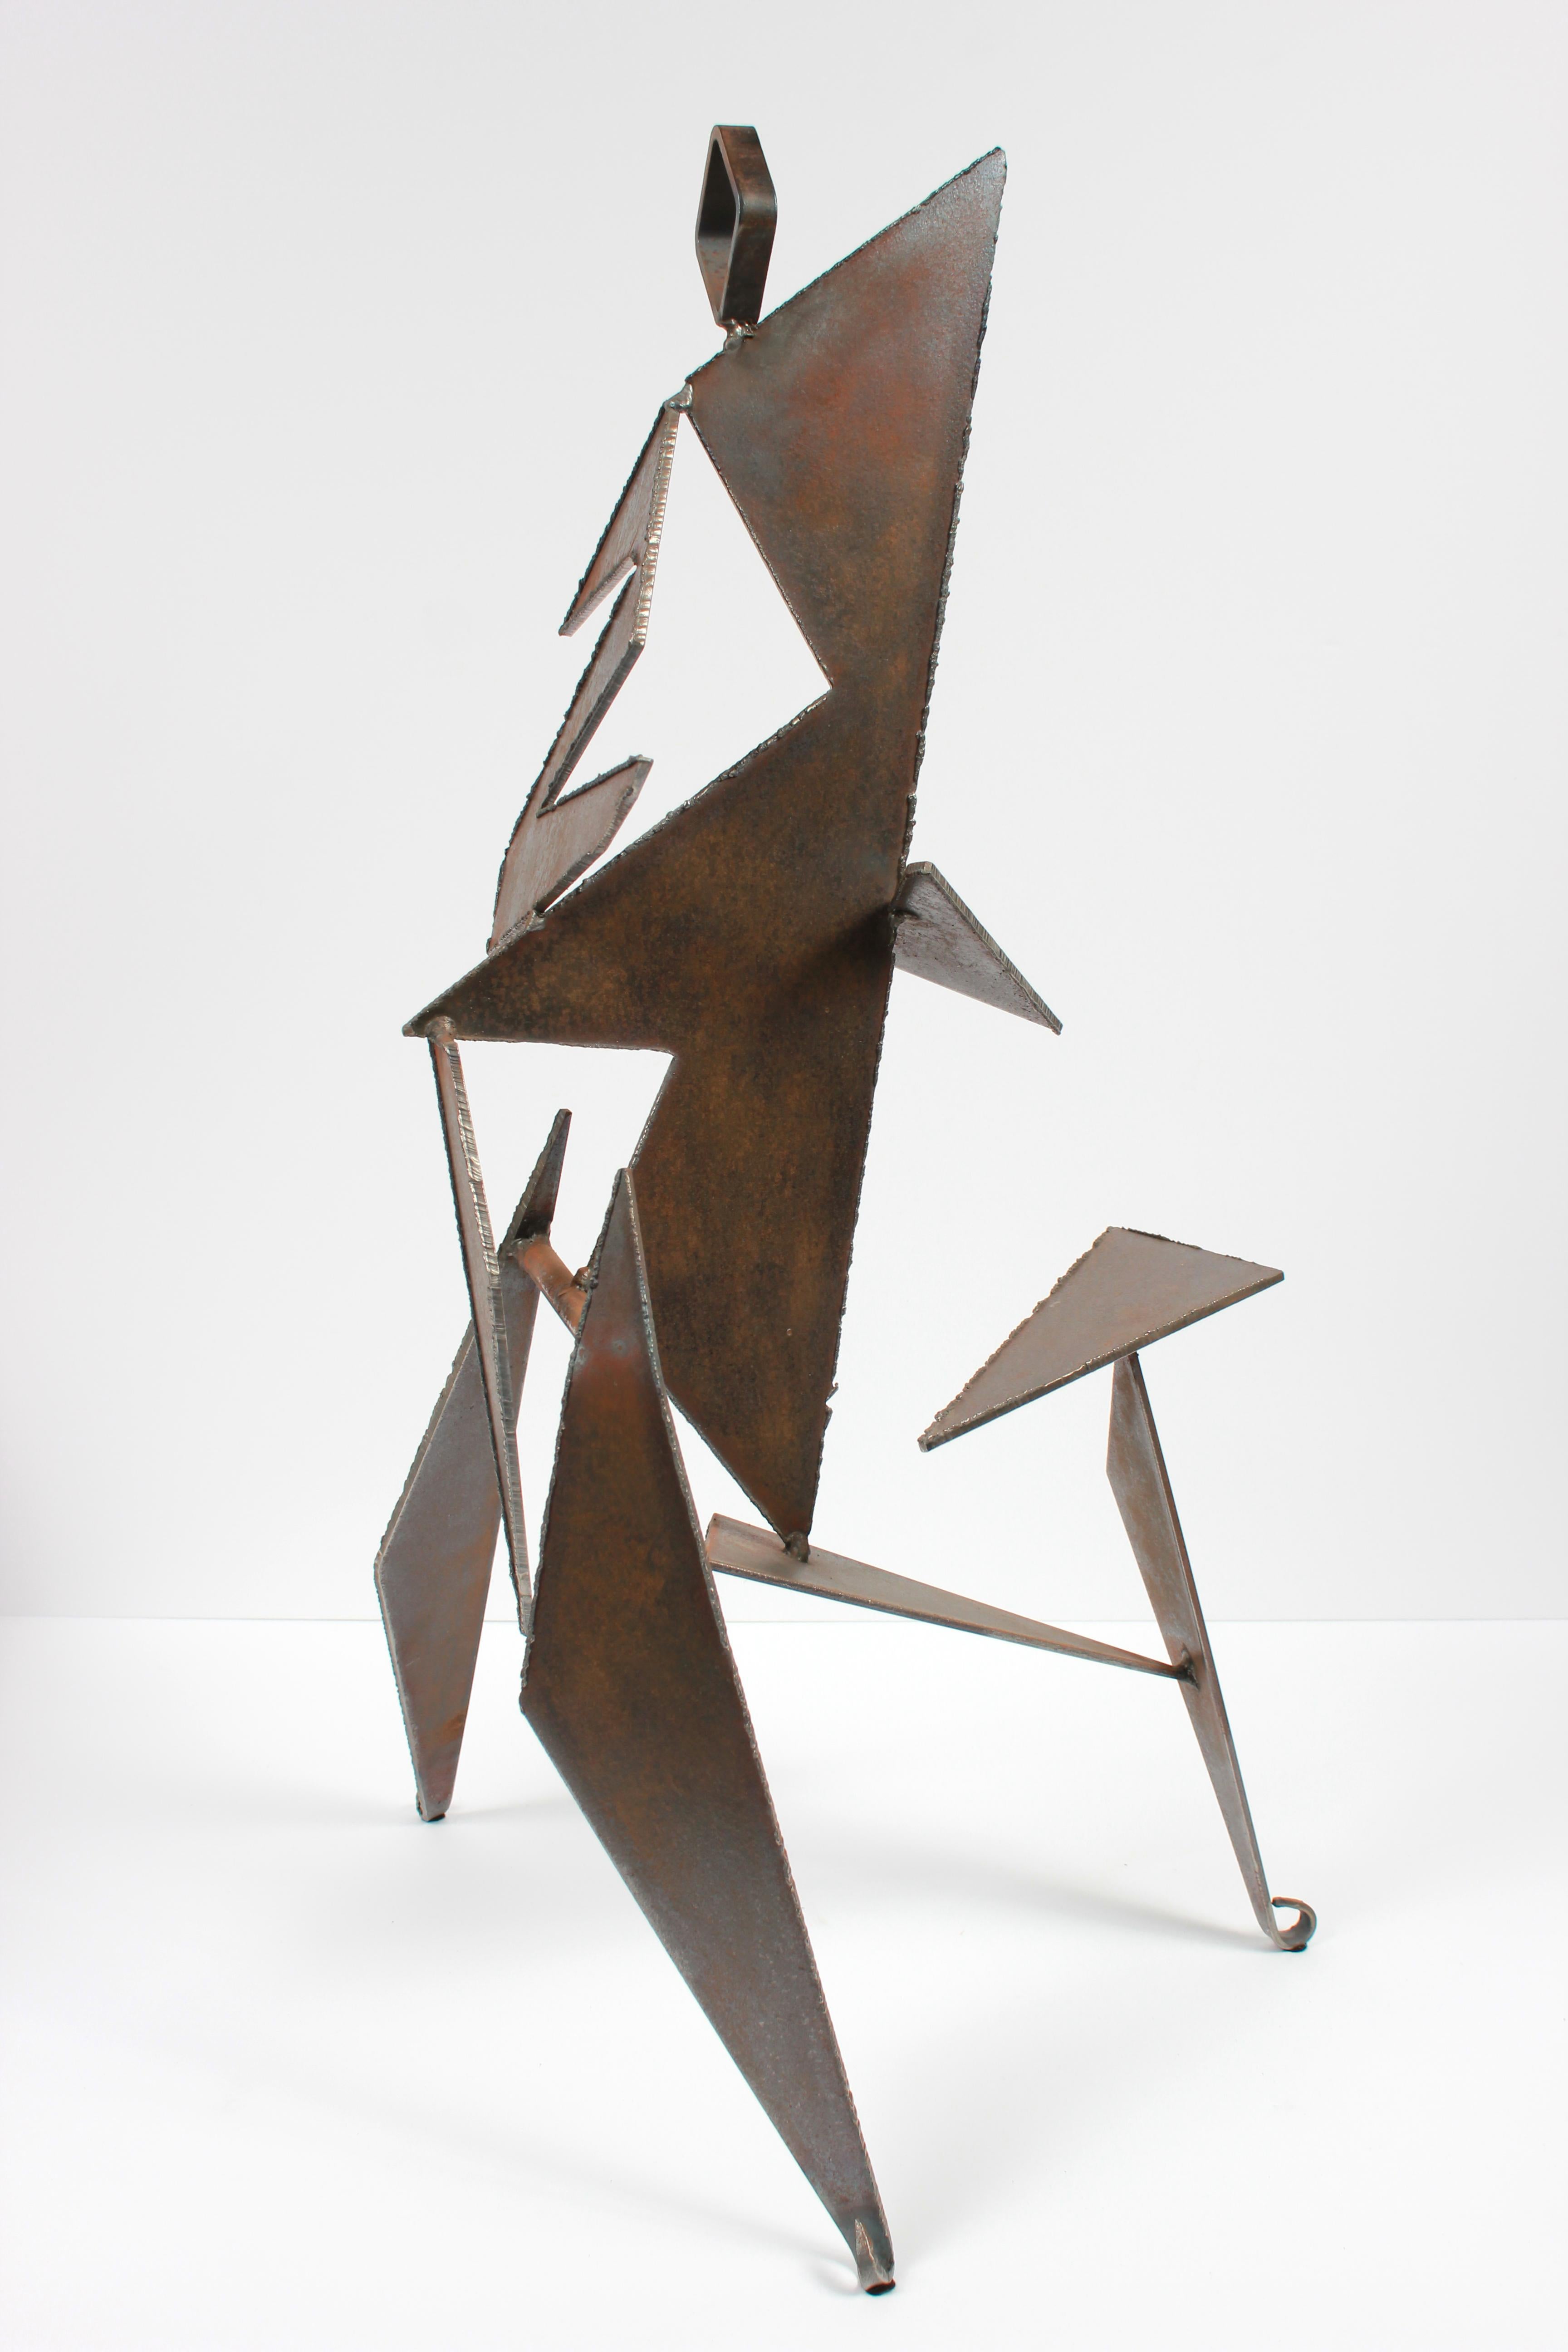 angular sculpture